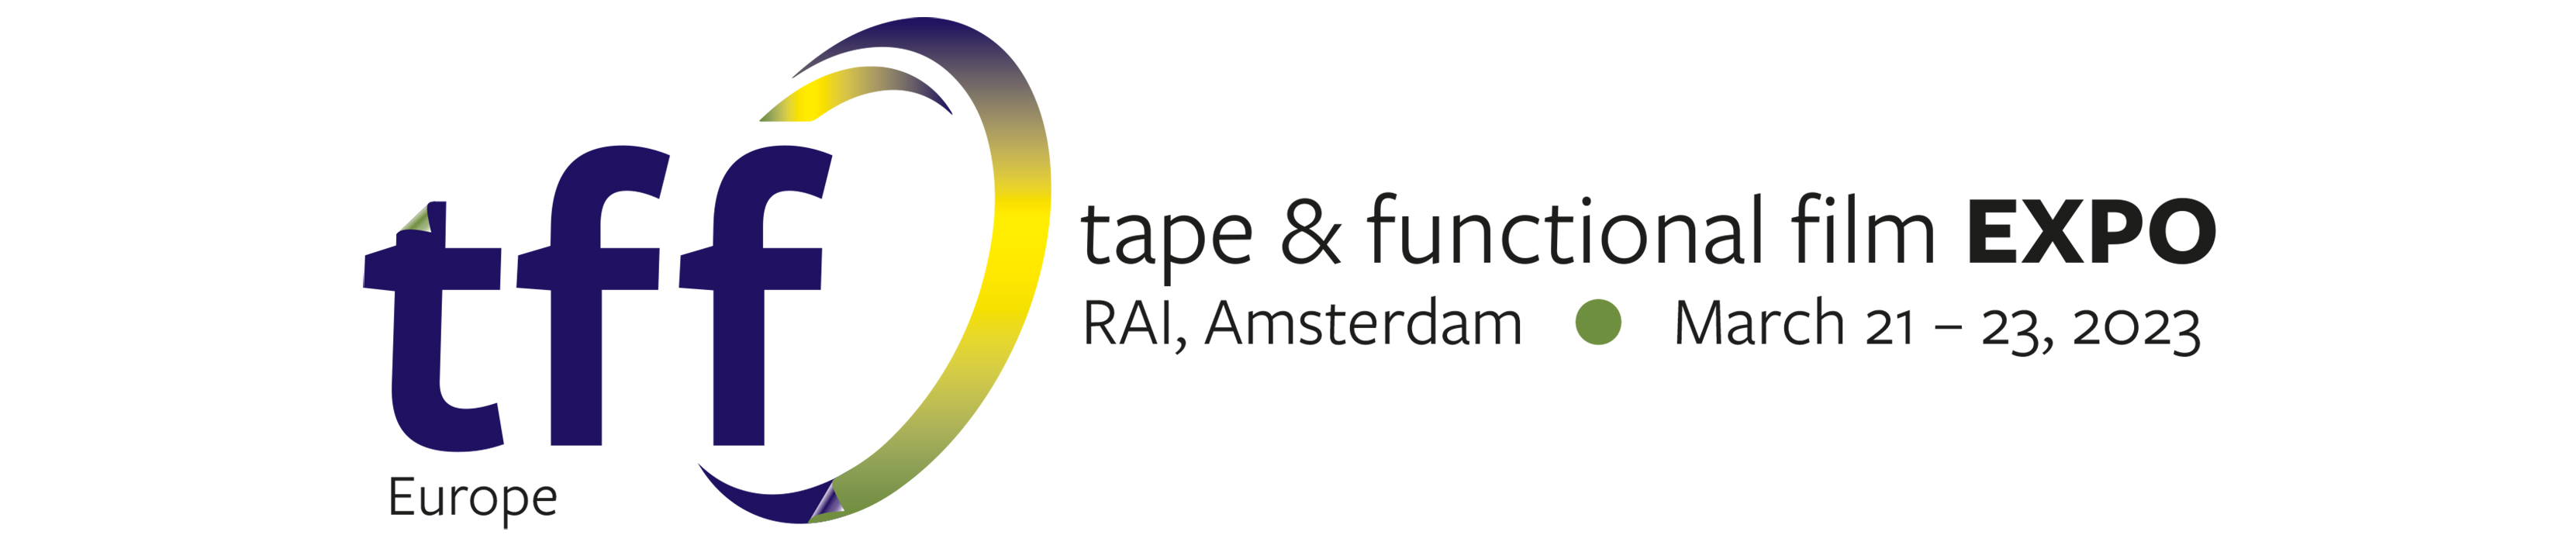 Tape & Functional Film Expo Europe & USA